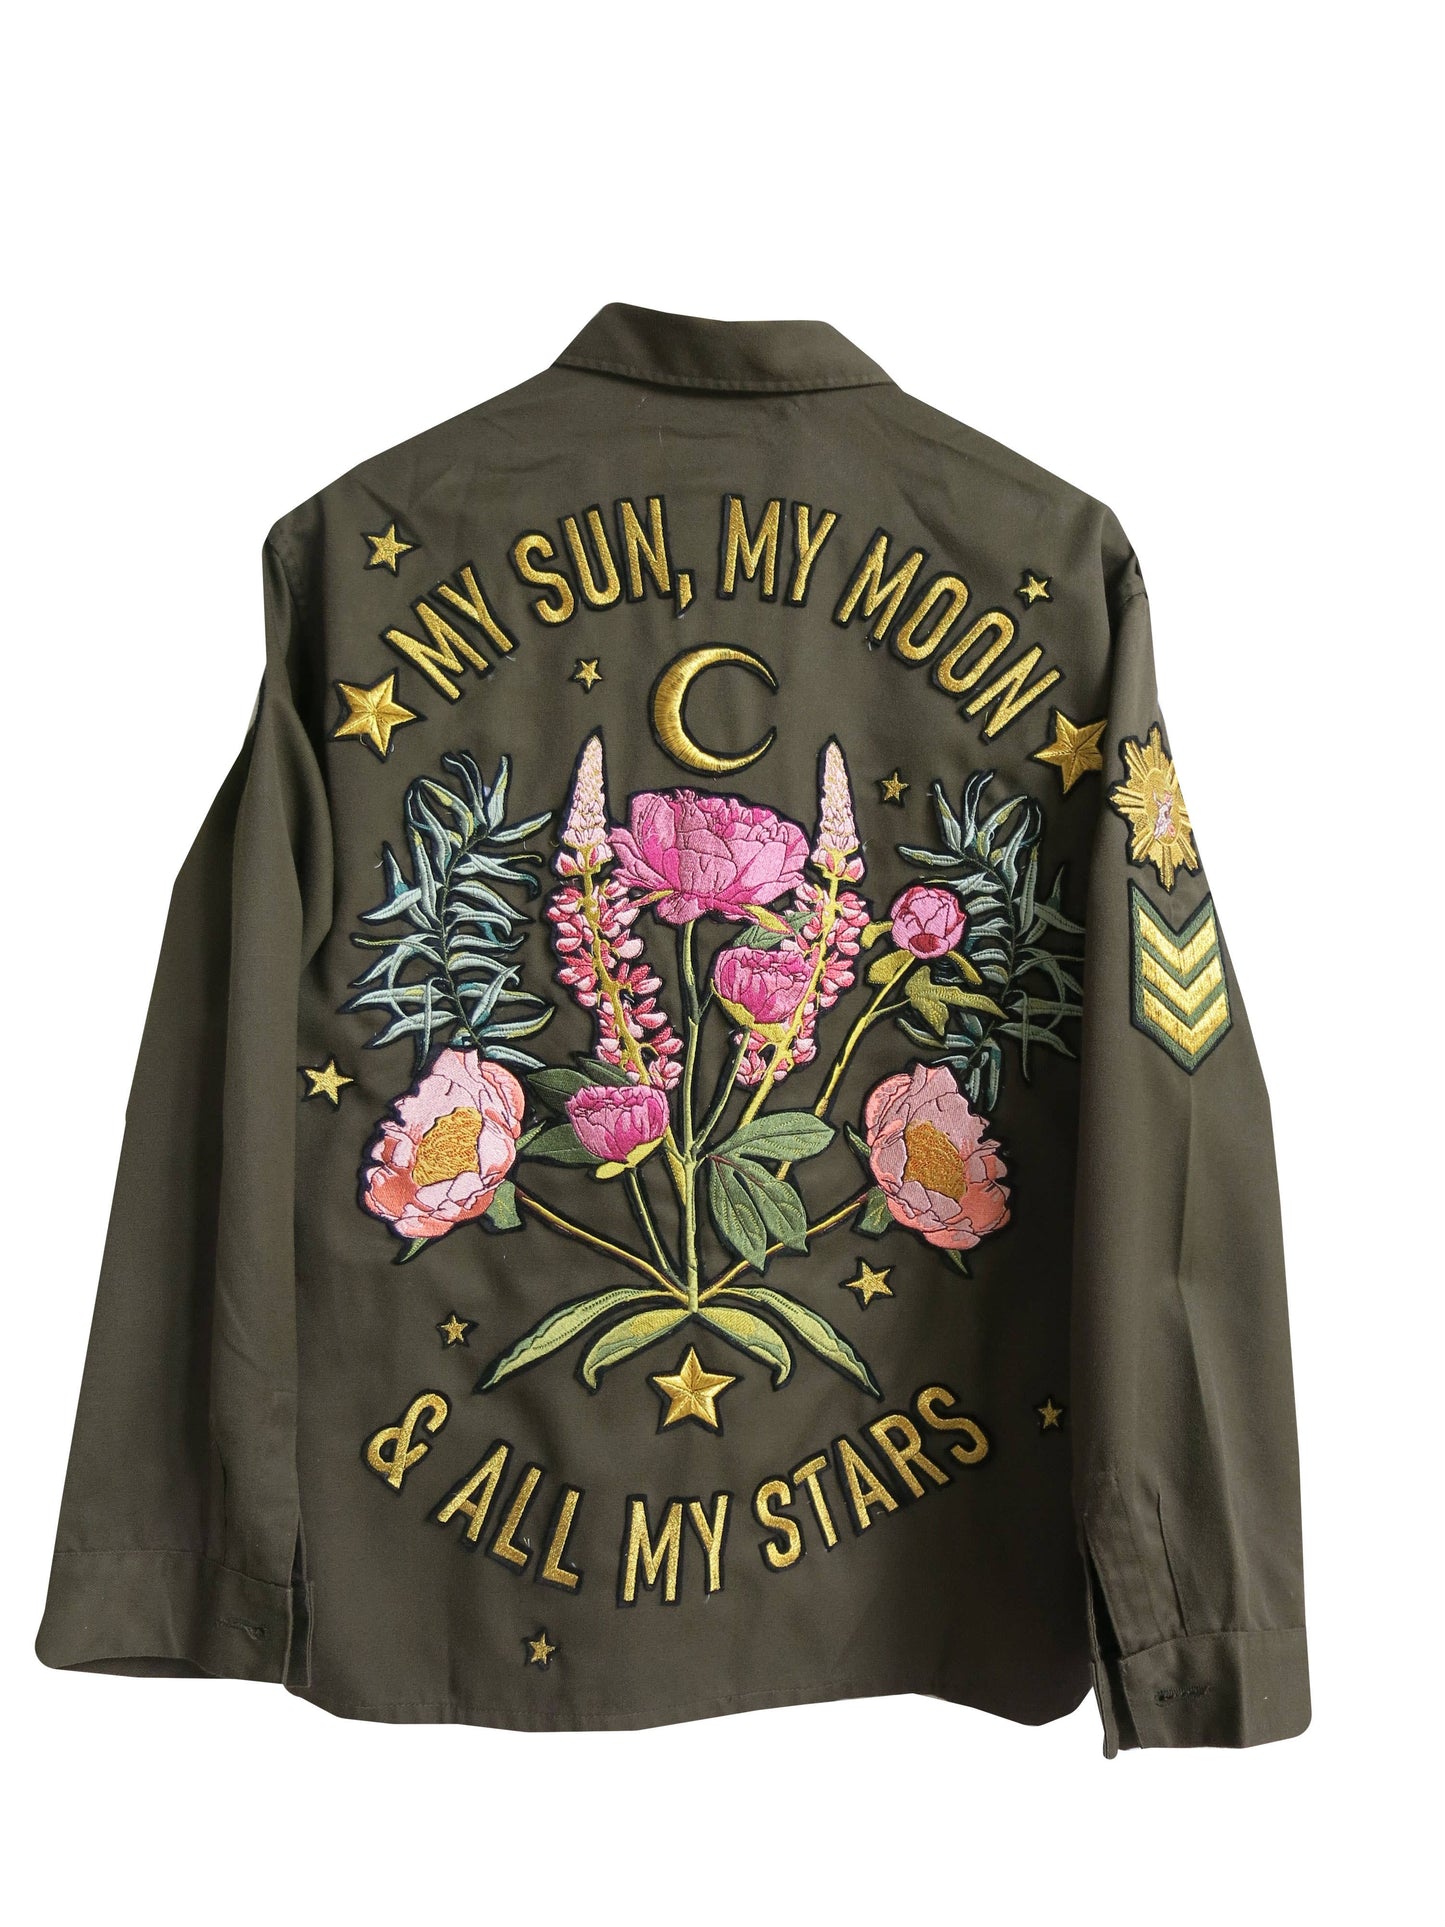 'My Sun My Moon' Embroidered Army Jacket - La De Da